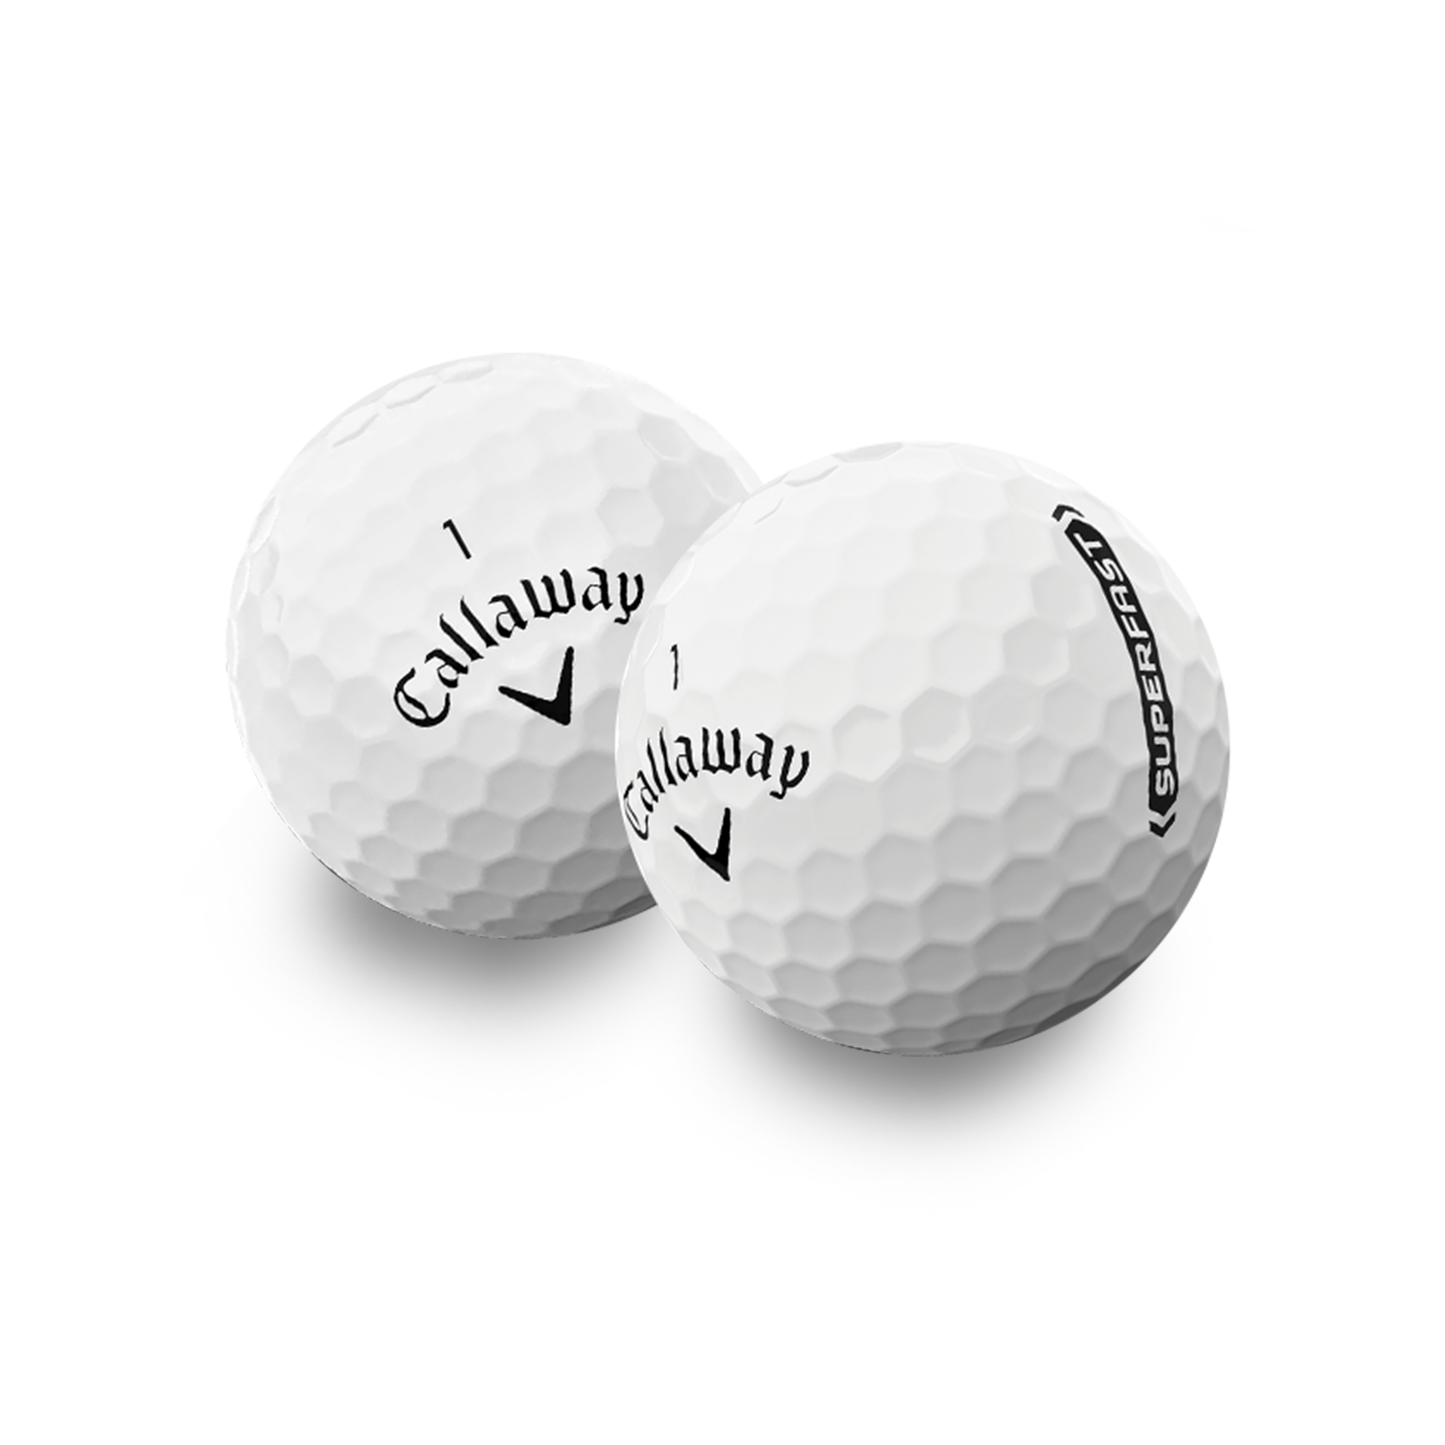 Used Callaway Super Fast Golf Balls - 1 Dozen